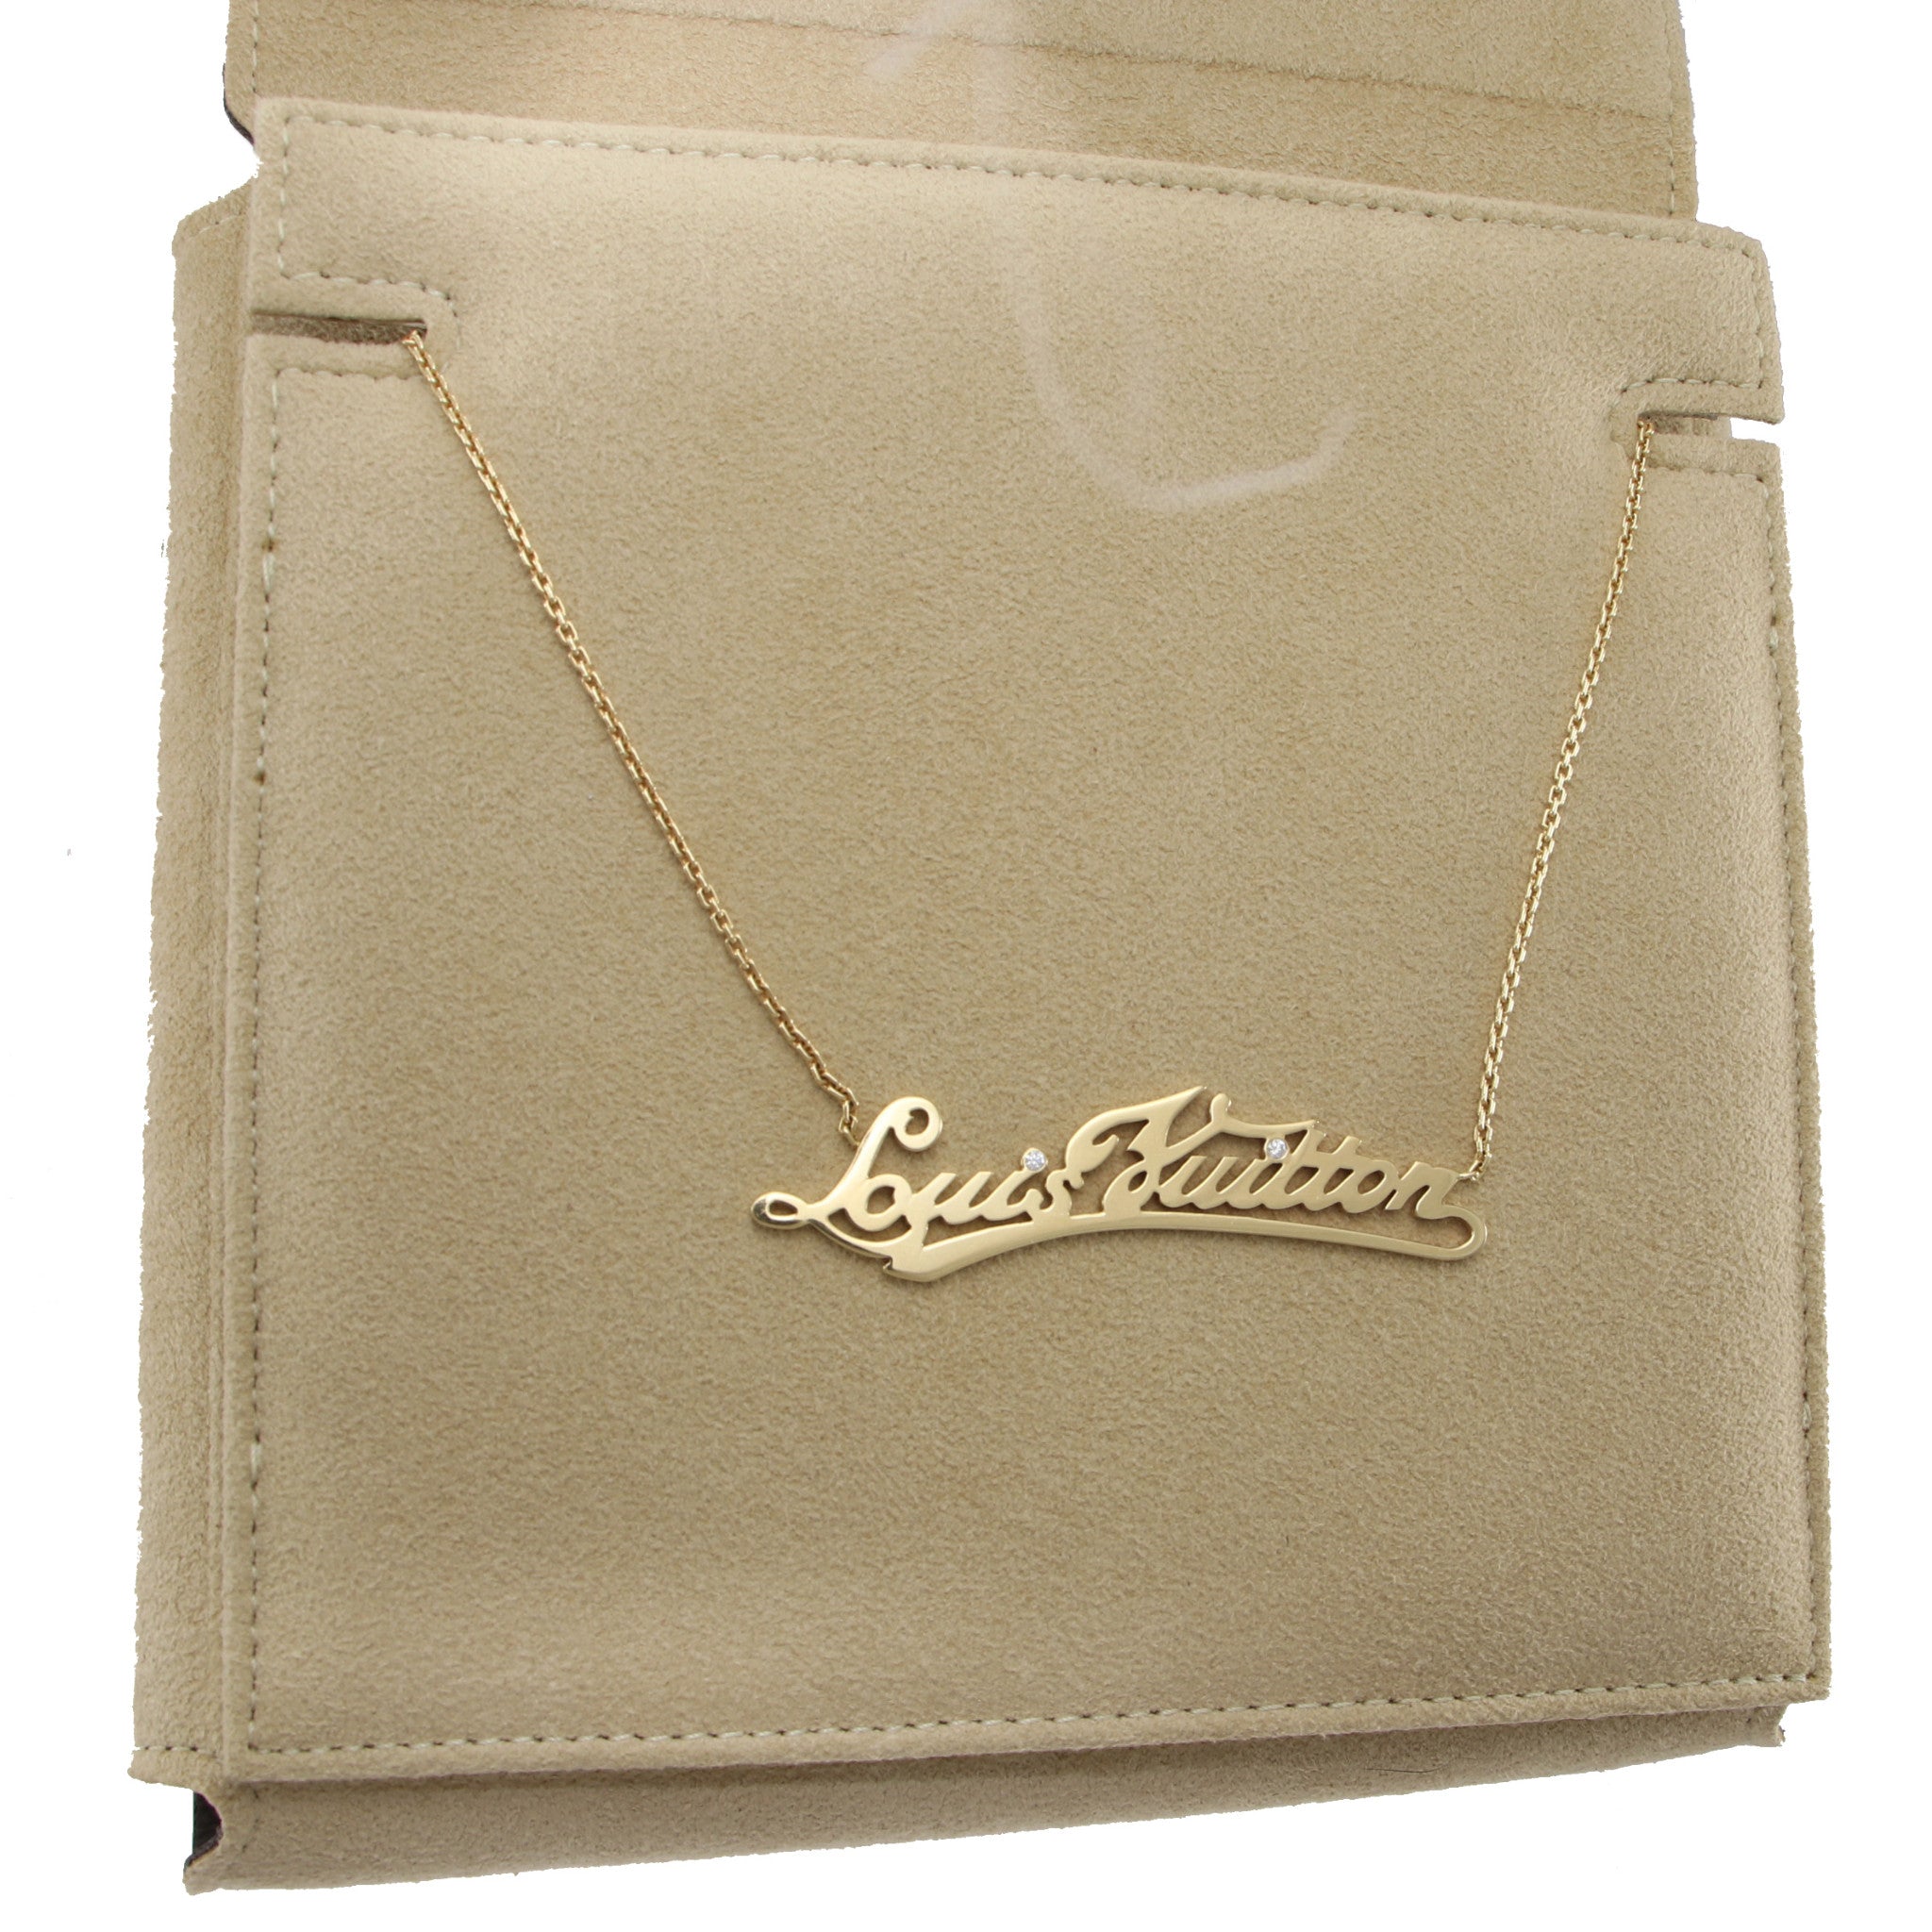 Louis Vuitton Diamond Signature ID Name Plate Necklace 18K Yellow